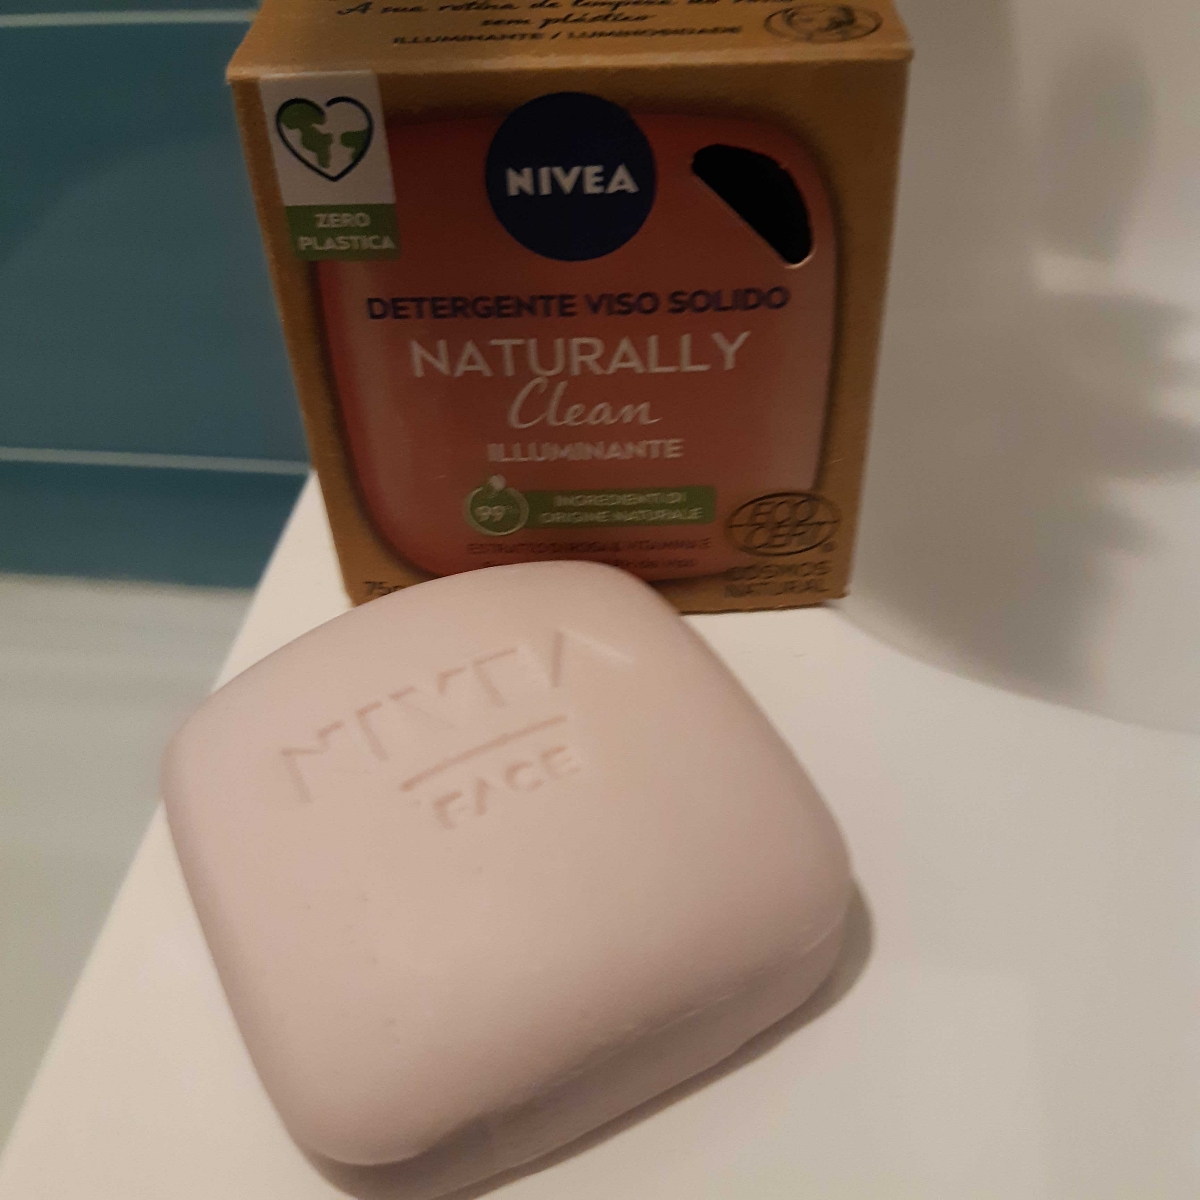 Nivea Naturally Clean Illuminante Detergente Viso Solido Reviews | abillion